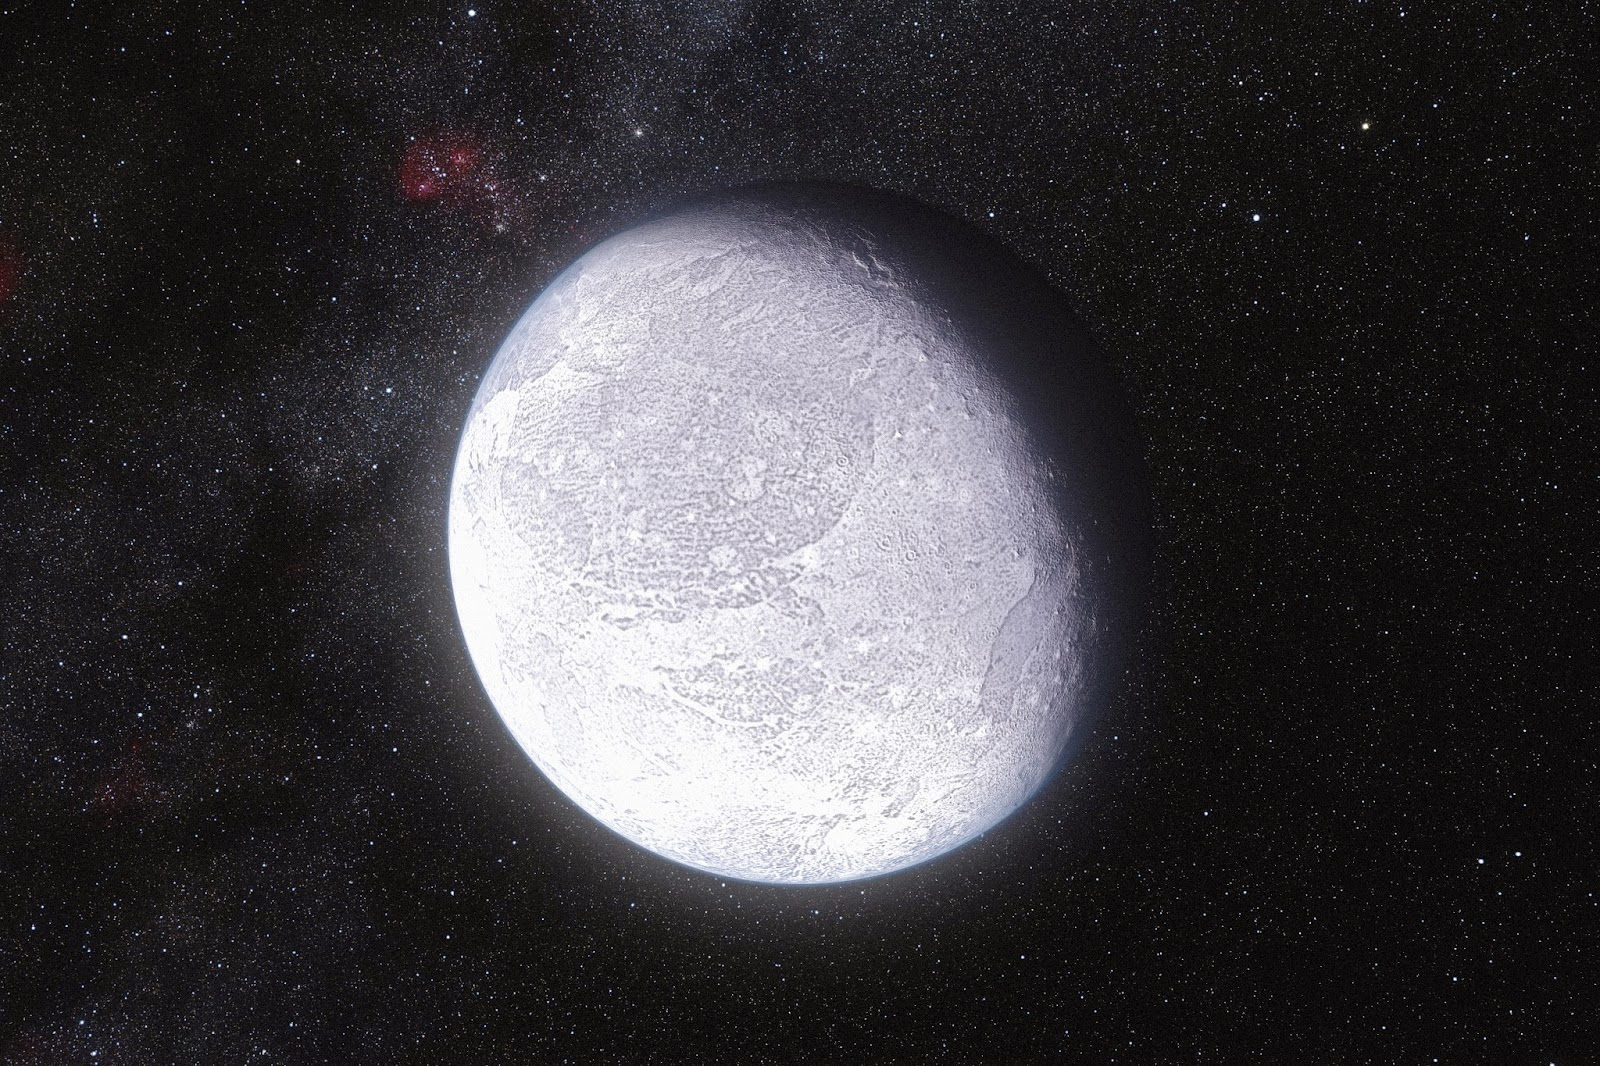 the Eris dwarf planet